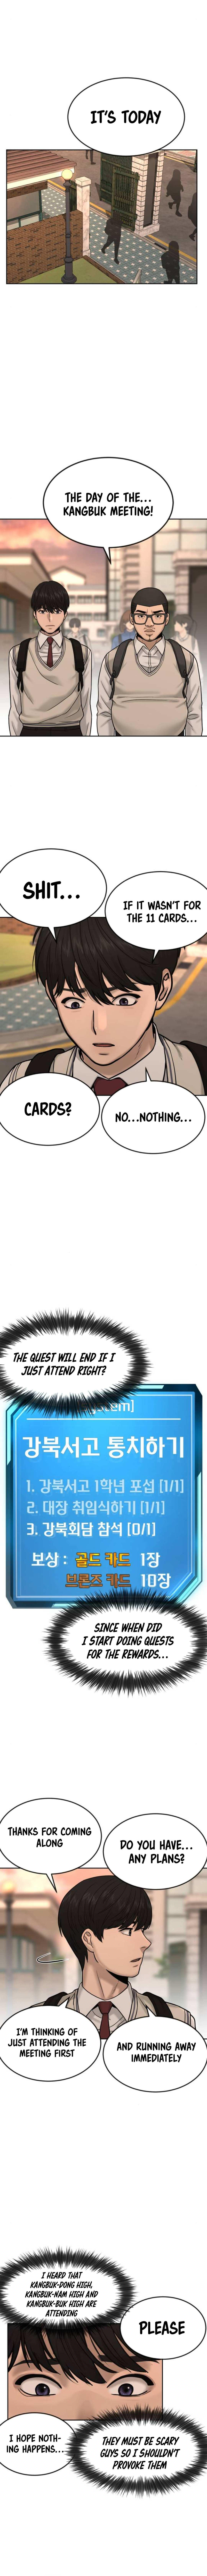 Quest Supremacy Chapter 12 page 7 - Mangakakalot